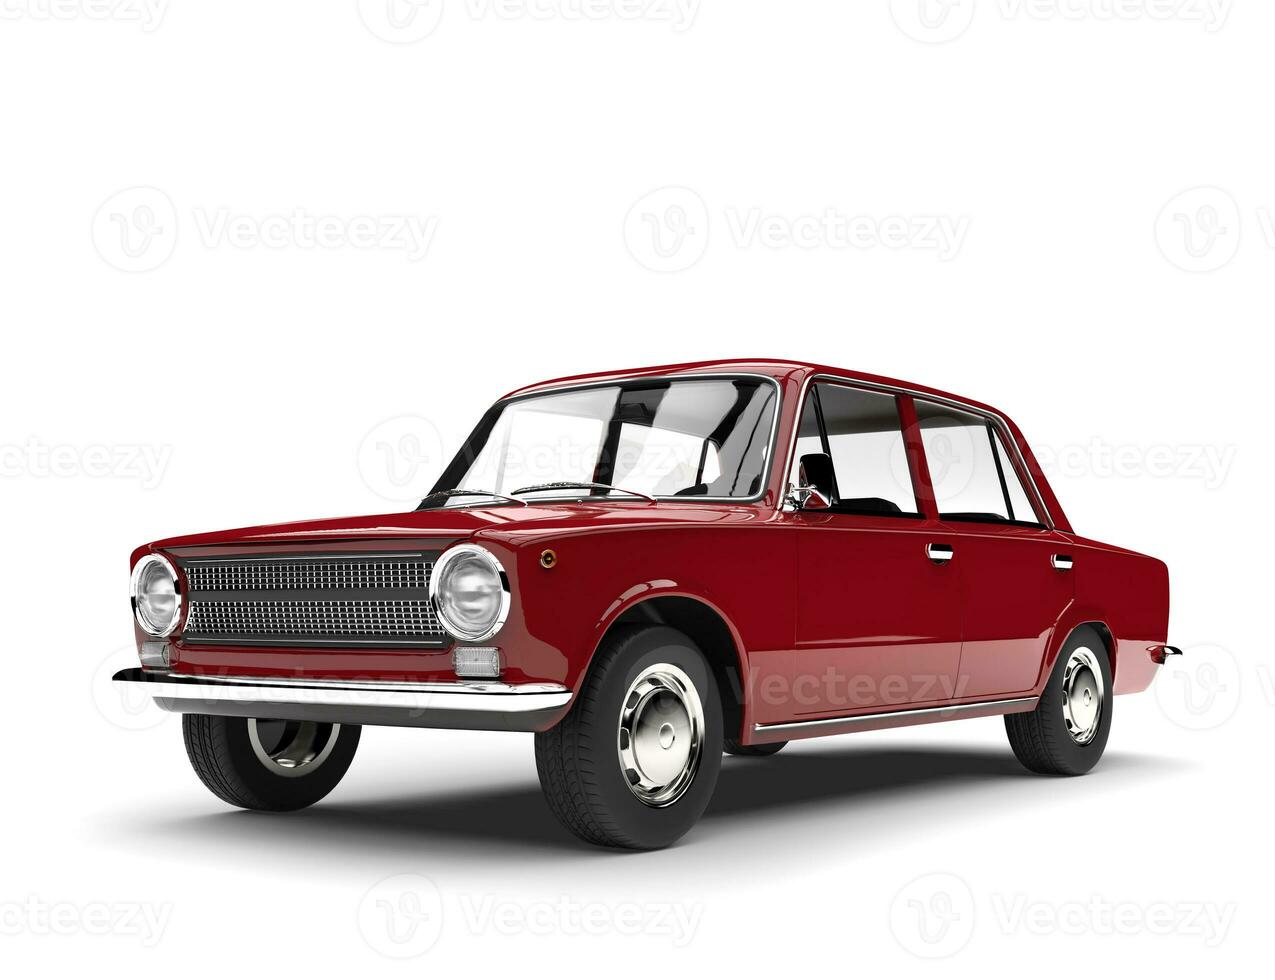 Metallic red soviet era vintage car photo